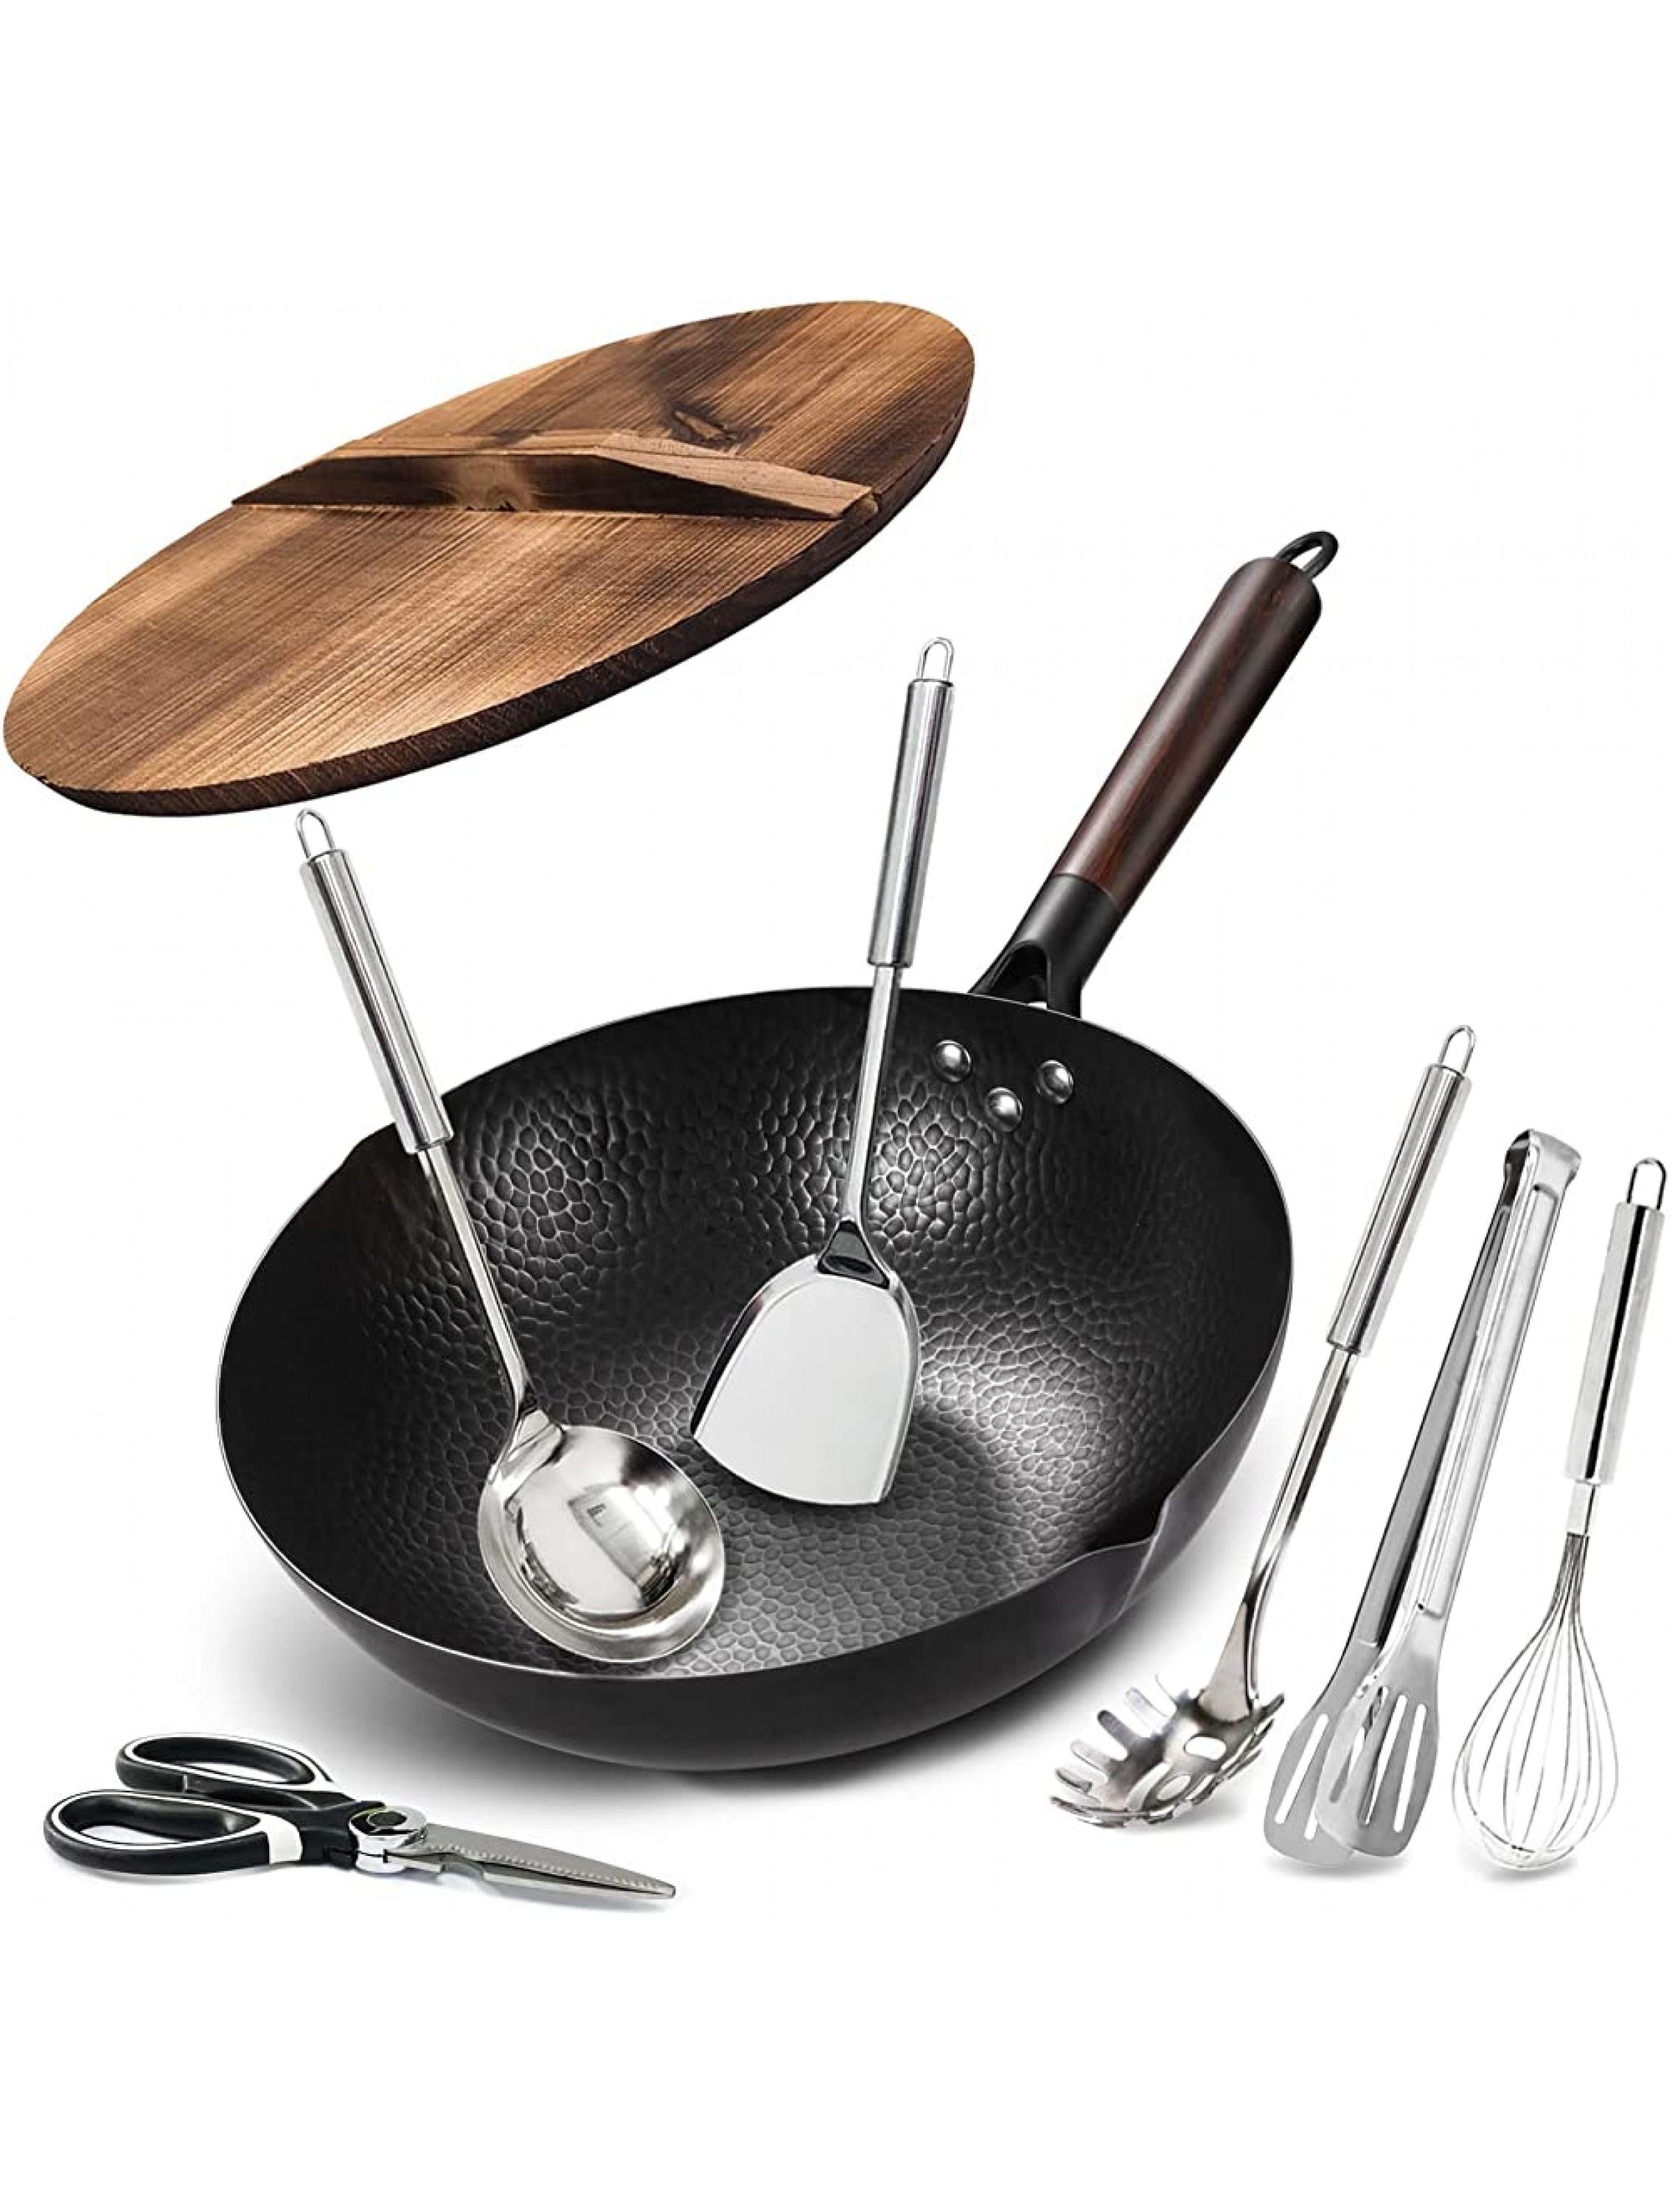 BrBrGo Wok Pan 13 Carbon Steel Stir Fry Wok Pan with Wooden Handle Flat Bottom Chinese Wok 10 Pieces Set with Cookware Accessories - BYL7UZ8TE